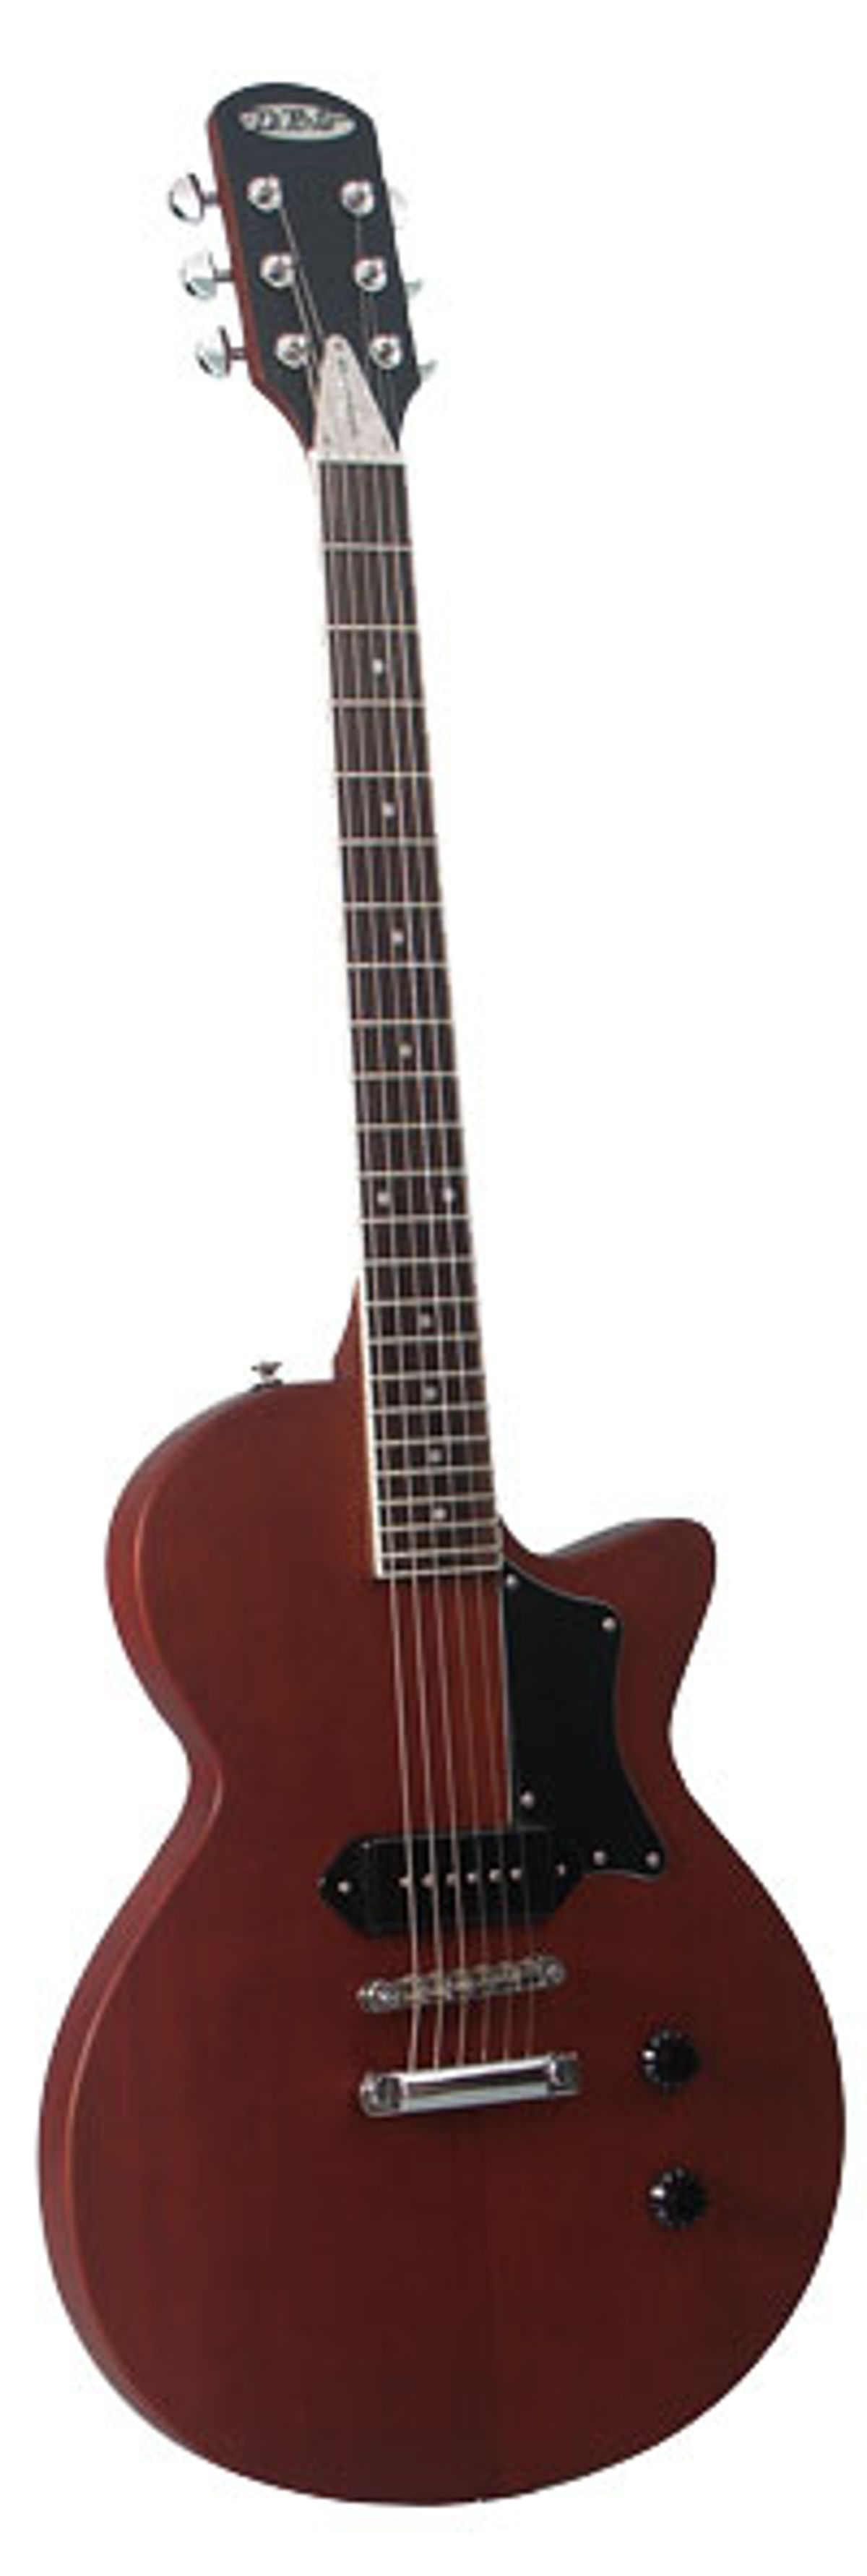 DiPinto Guitars Announces Belvedere Jr.